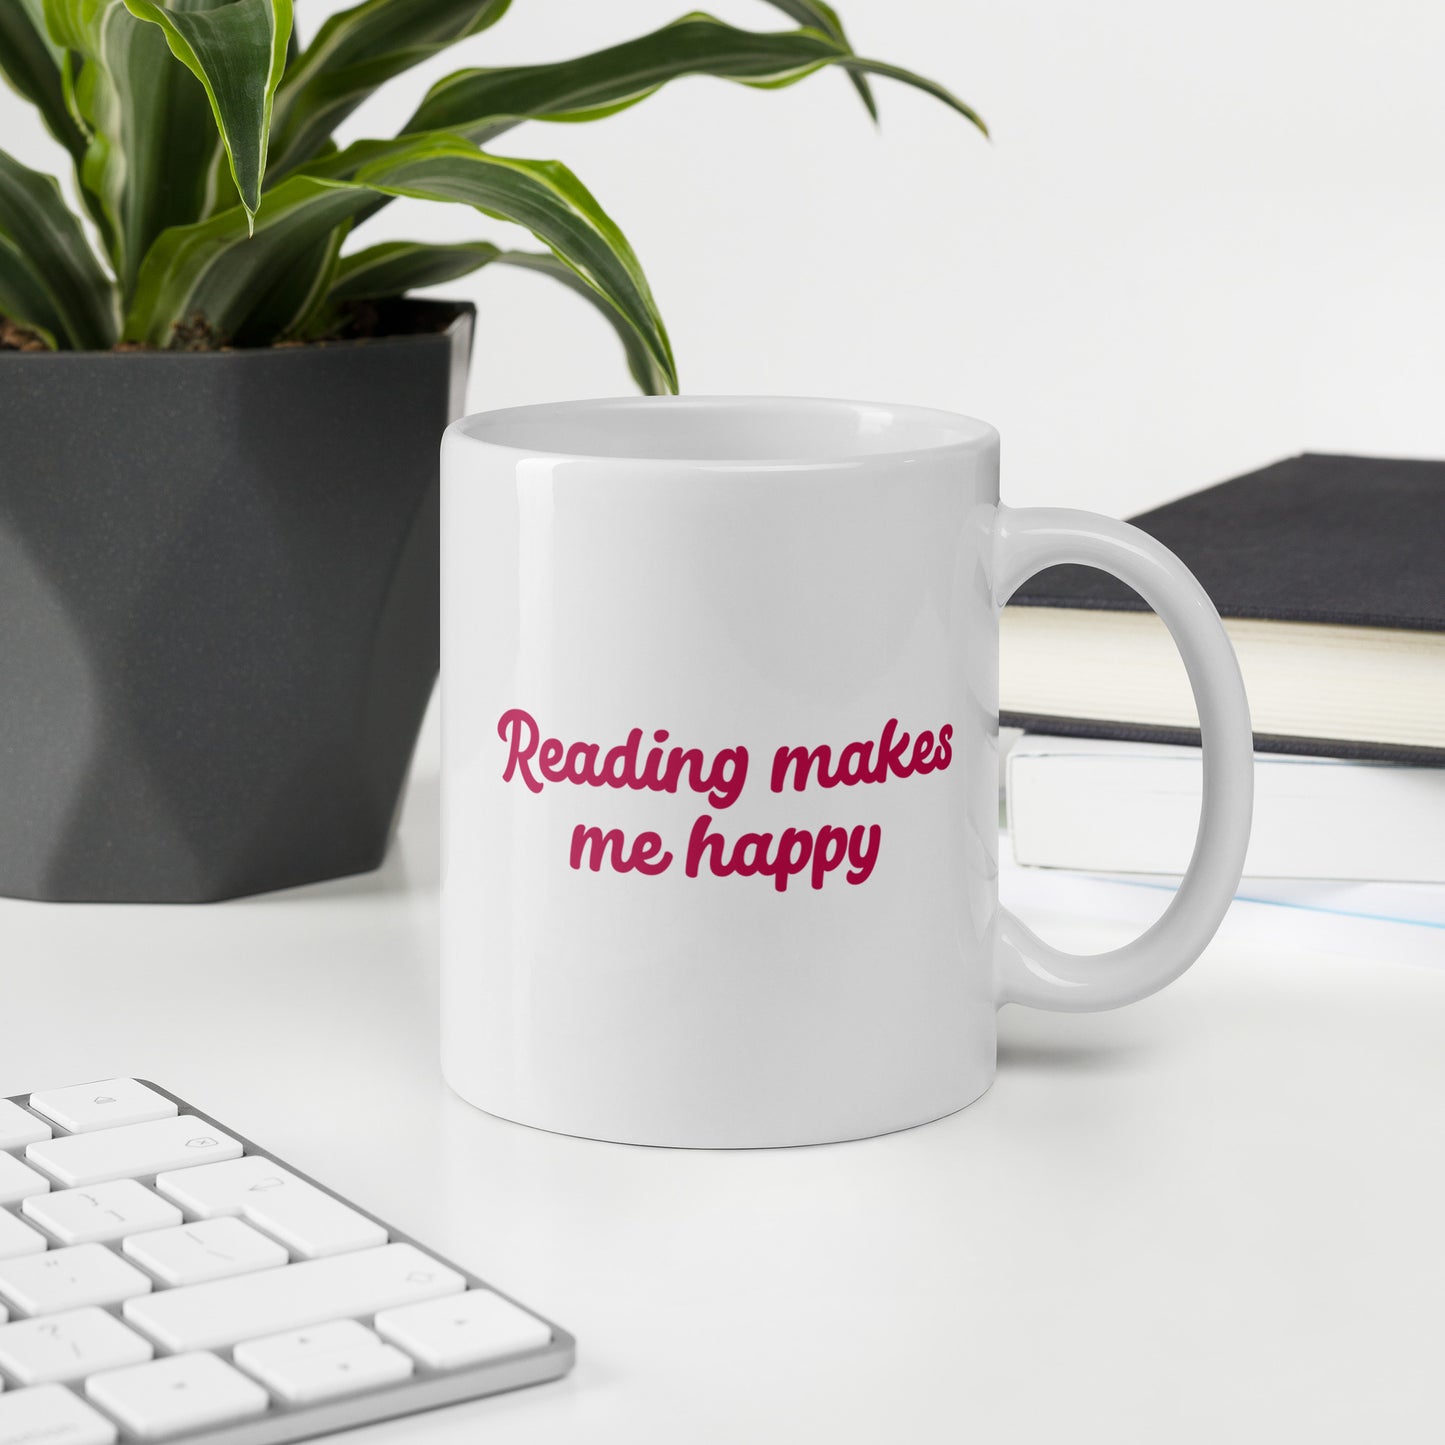 READING MAKES ME HAPPY - White Mug